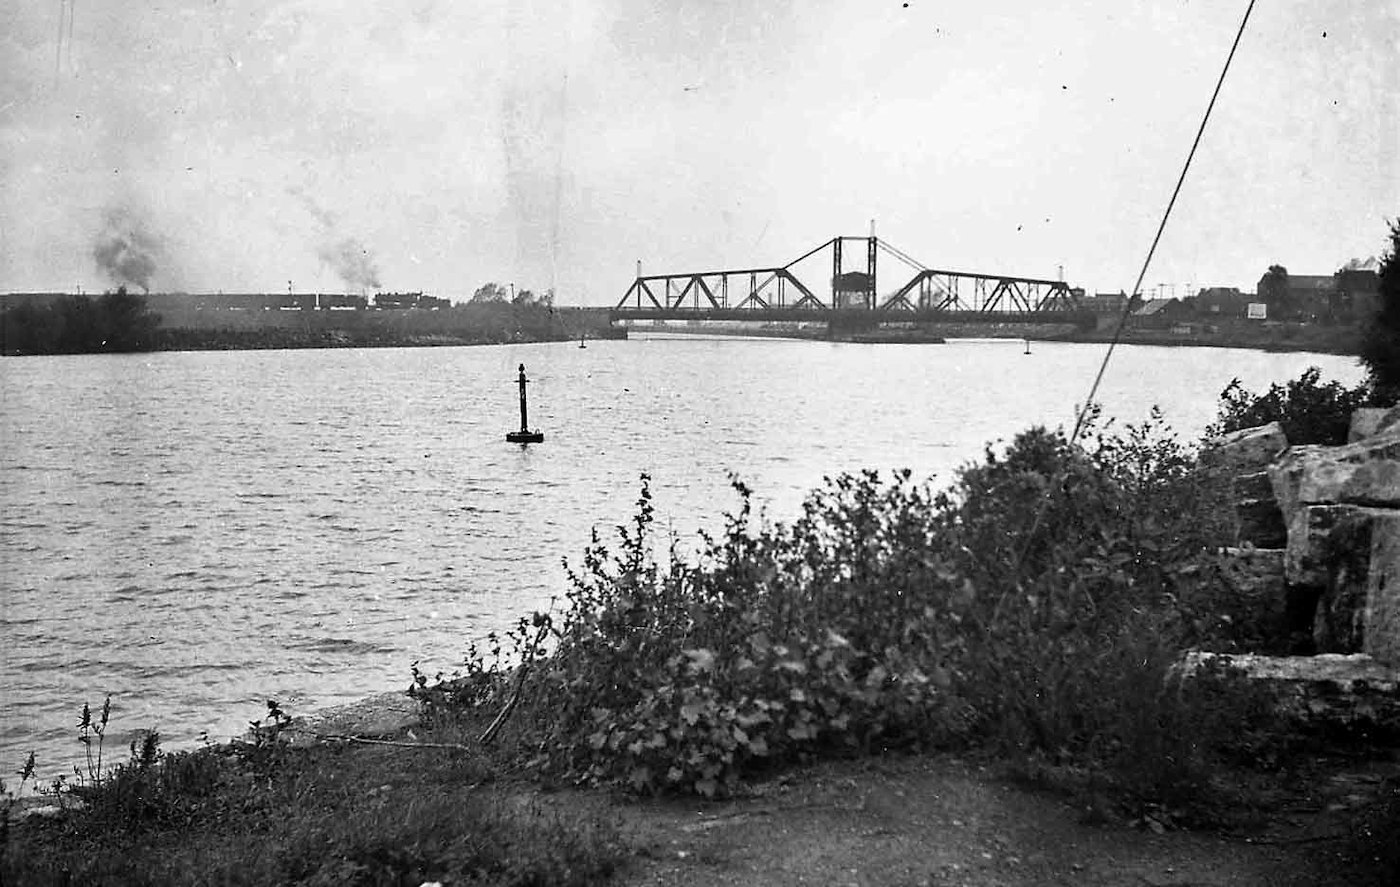 Railroad Swing Bridge across a River